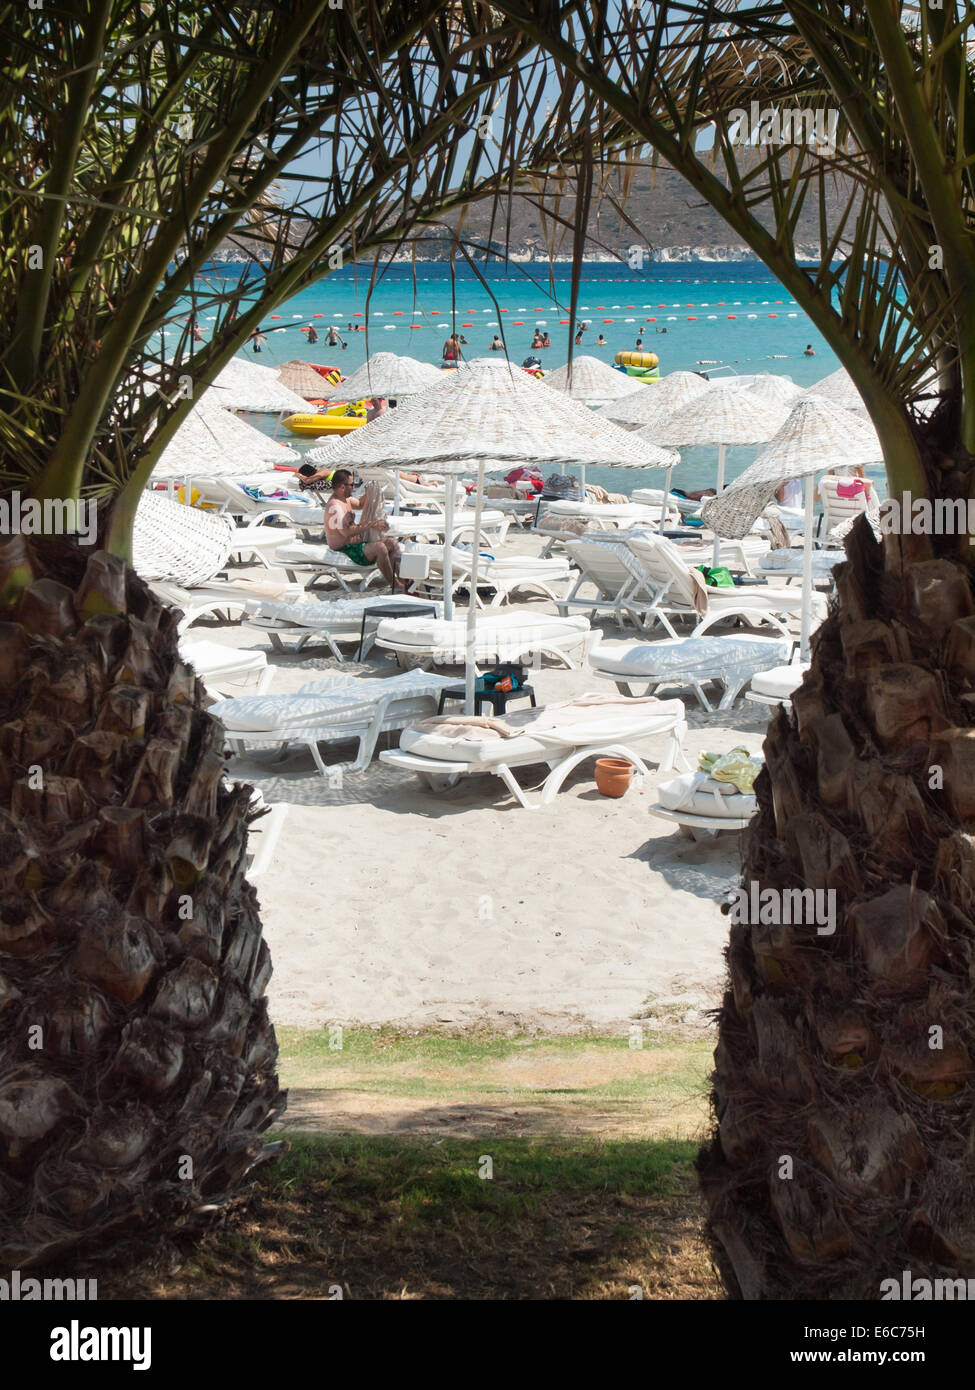 Cesme, Turkey,  August 2nd, 2014: Tourist beach on the Cesme peninsula in high season viewed through palm trees. Stock Photo